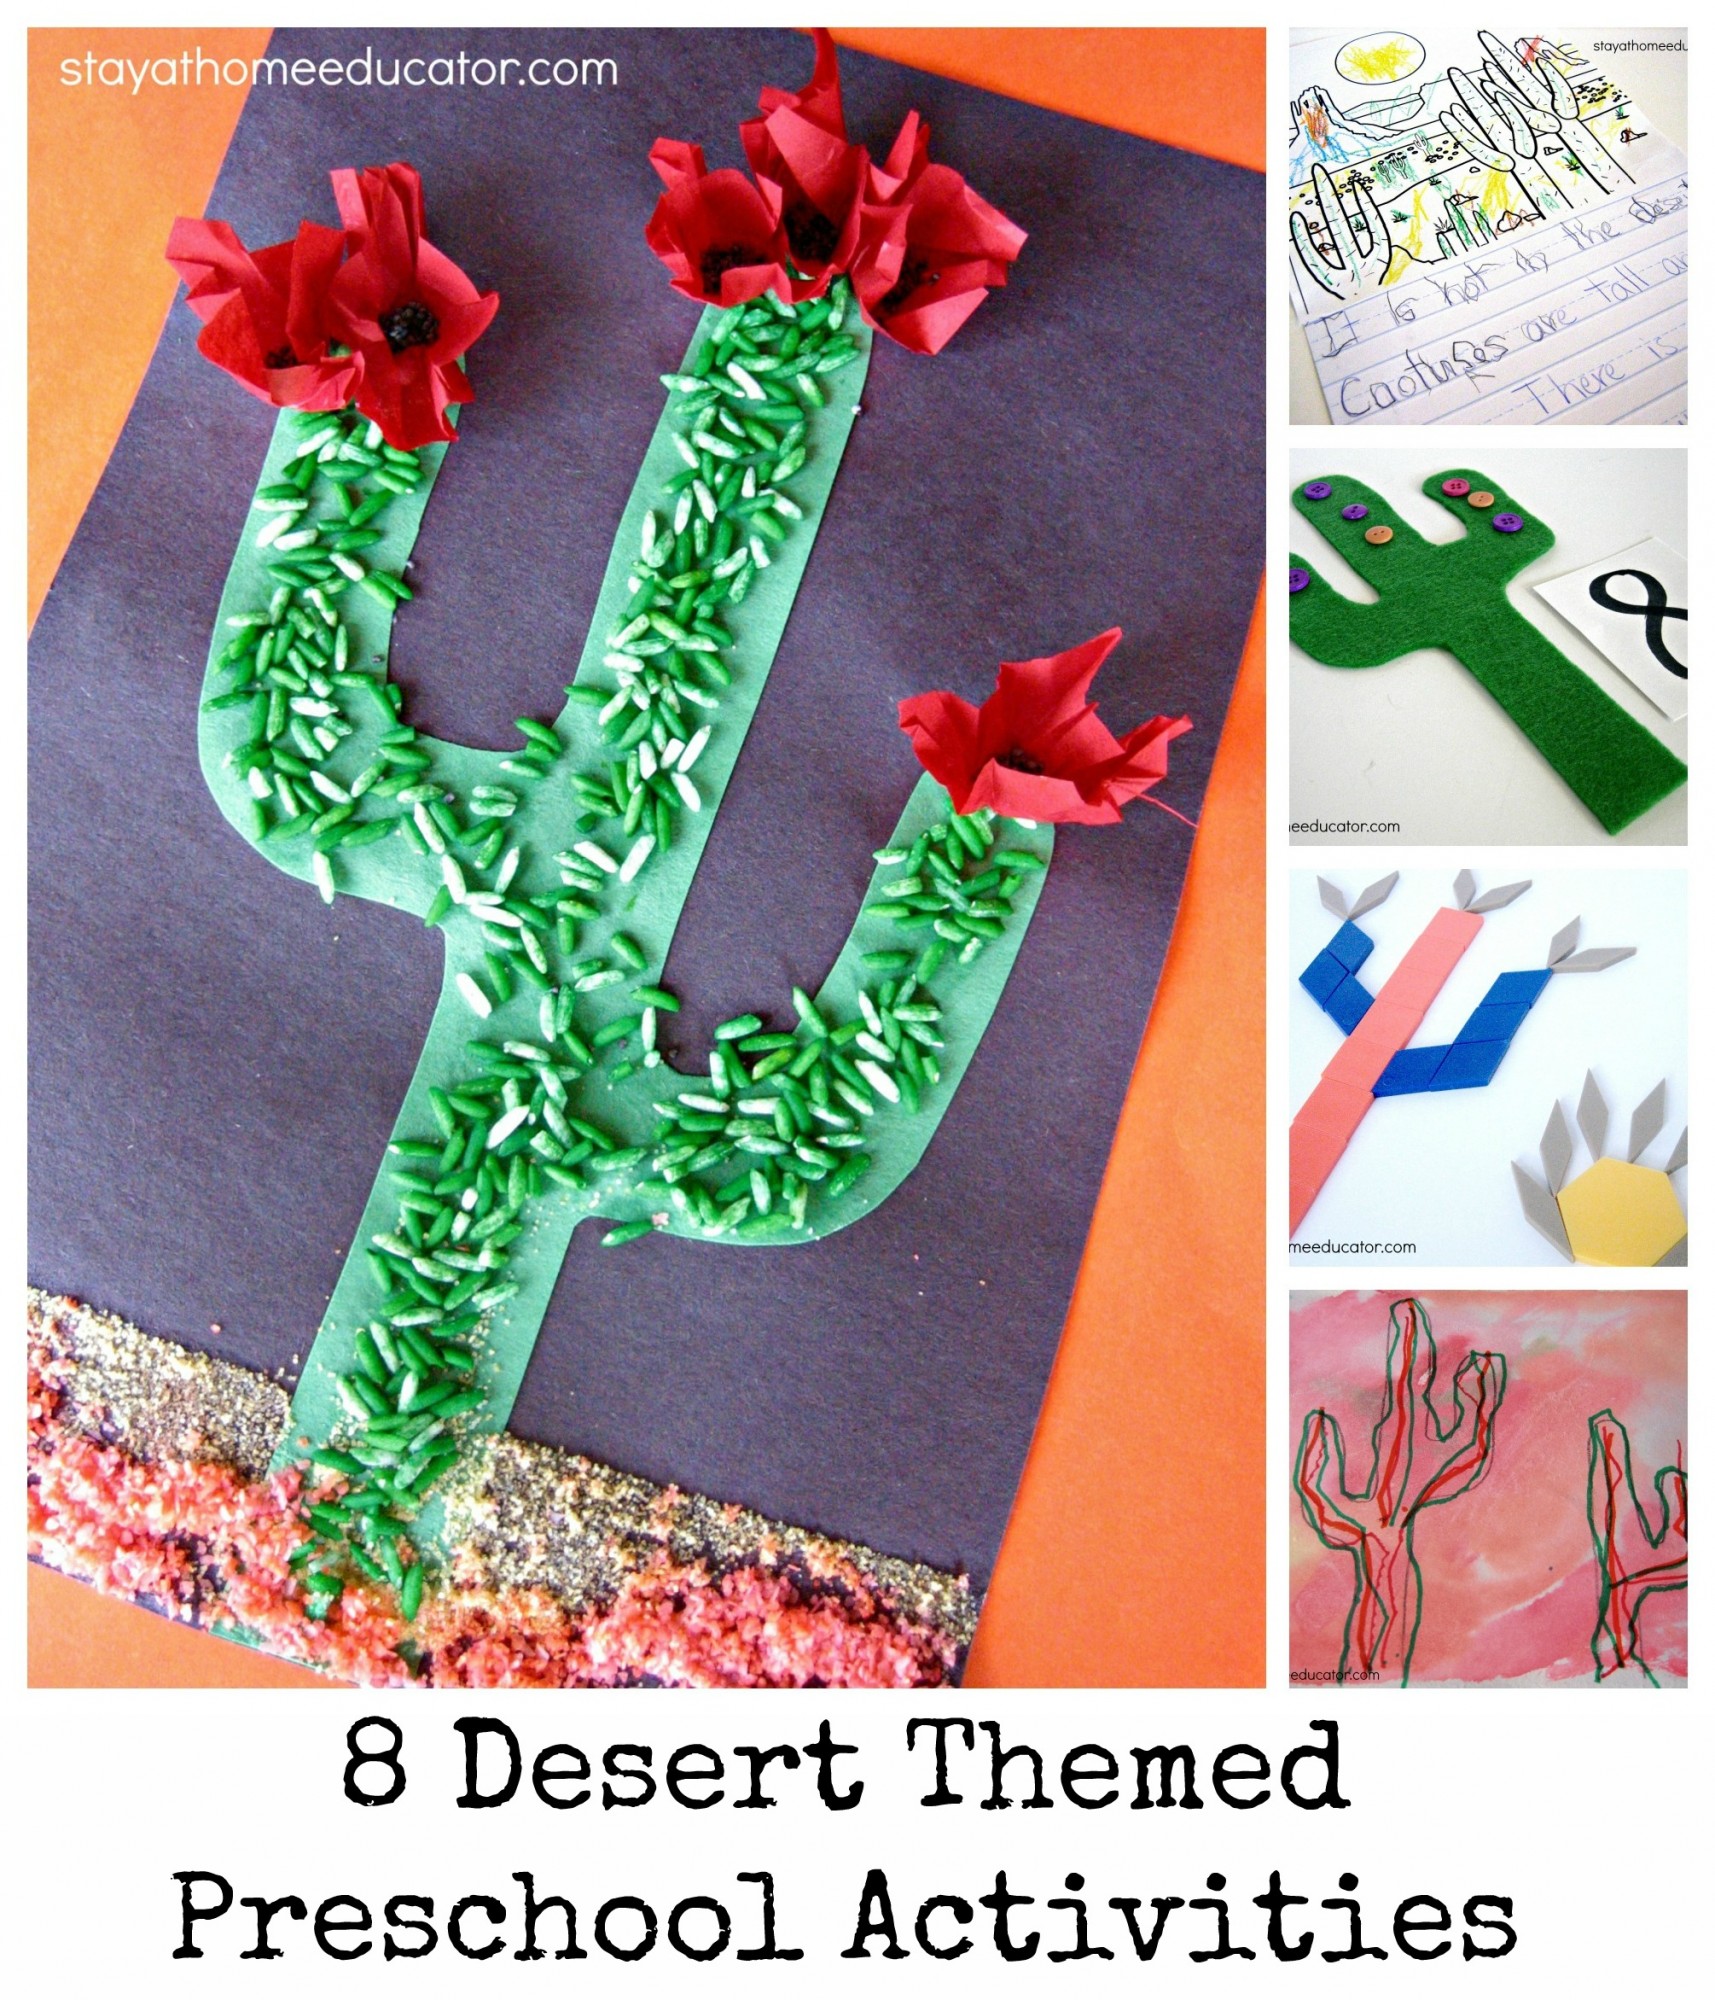 picture Desert Craft For Kindergarten